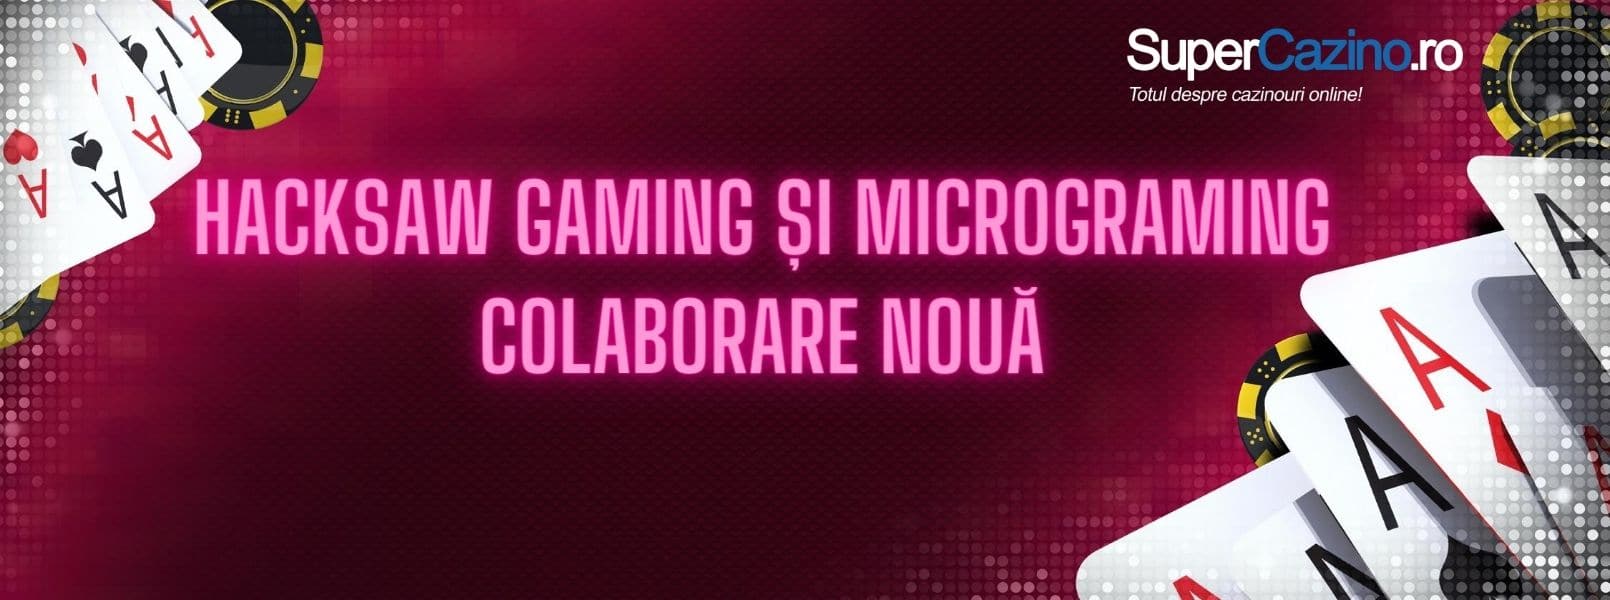 banner hacksaw gaming microgaming